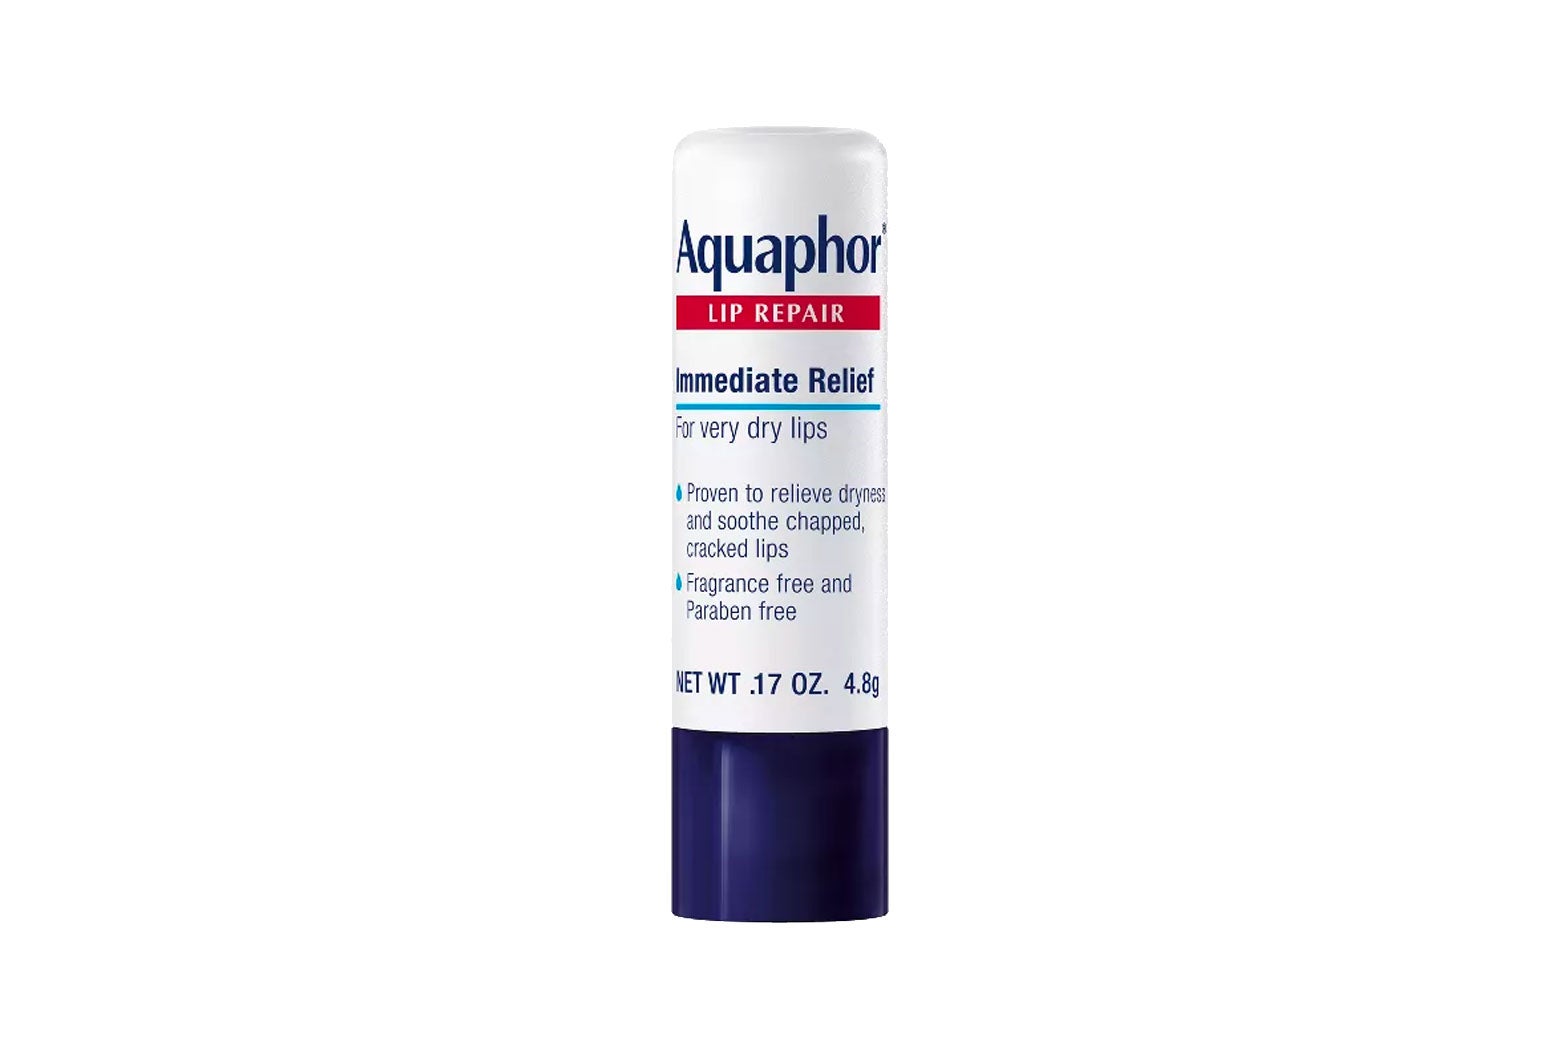 A tube of lip balm of the Aquaphor brand boasts immediate relief.